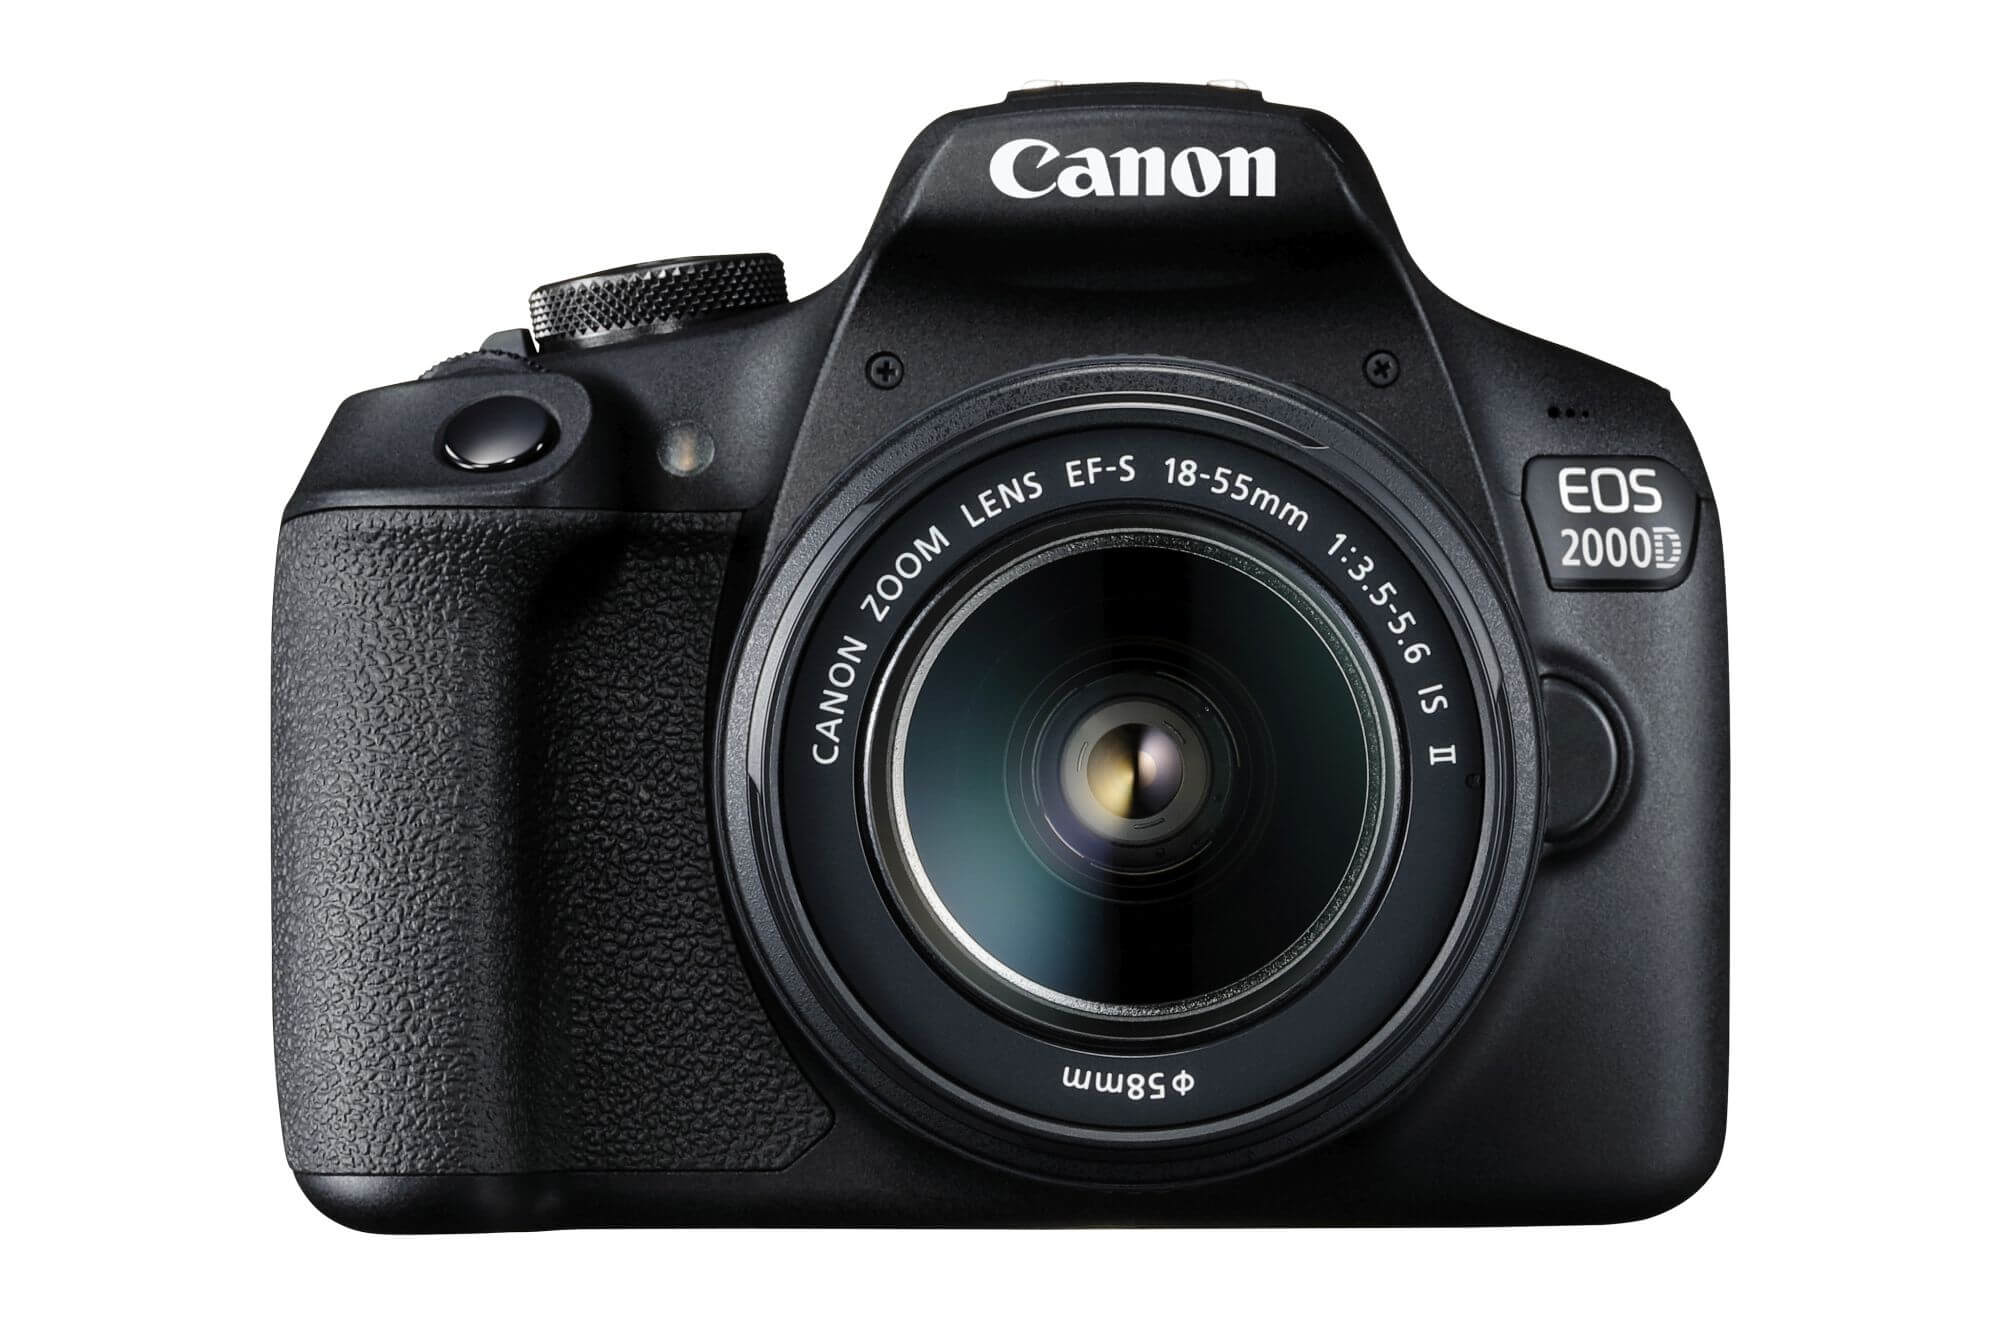 Canon представила зеркалки EOS 2000D и 4000D начального уровня